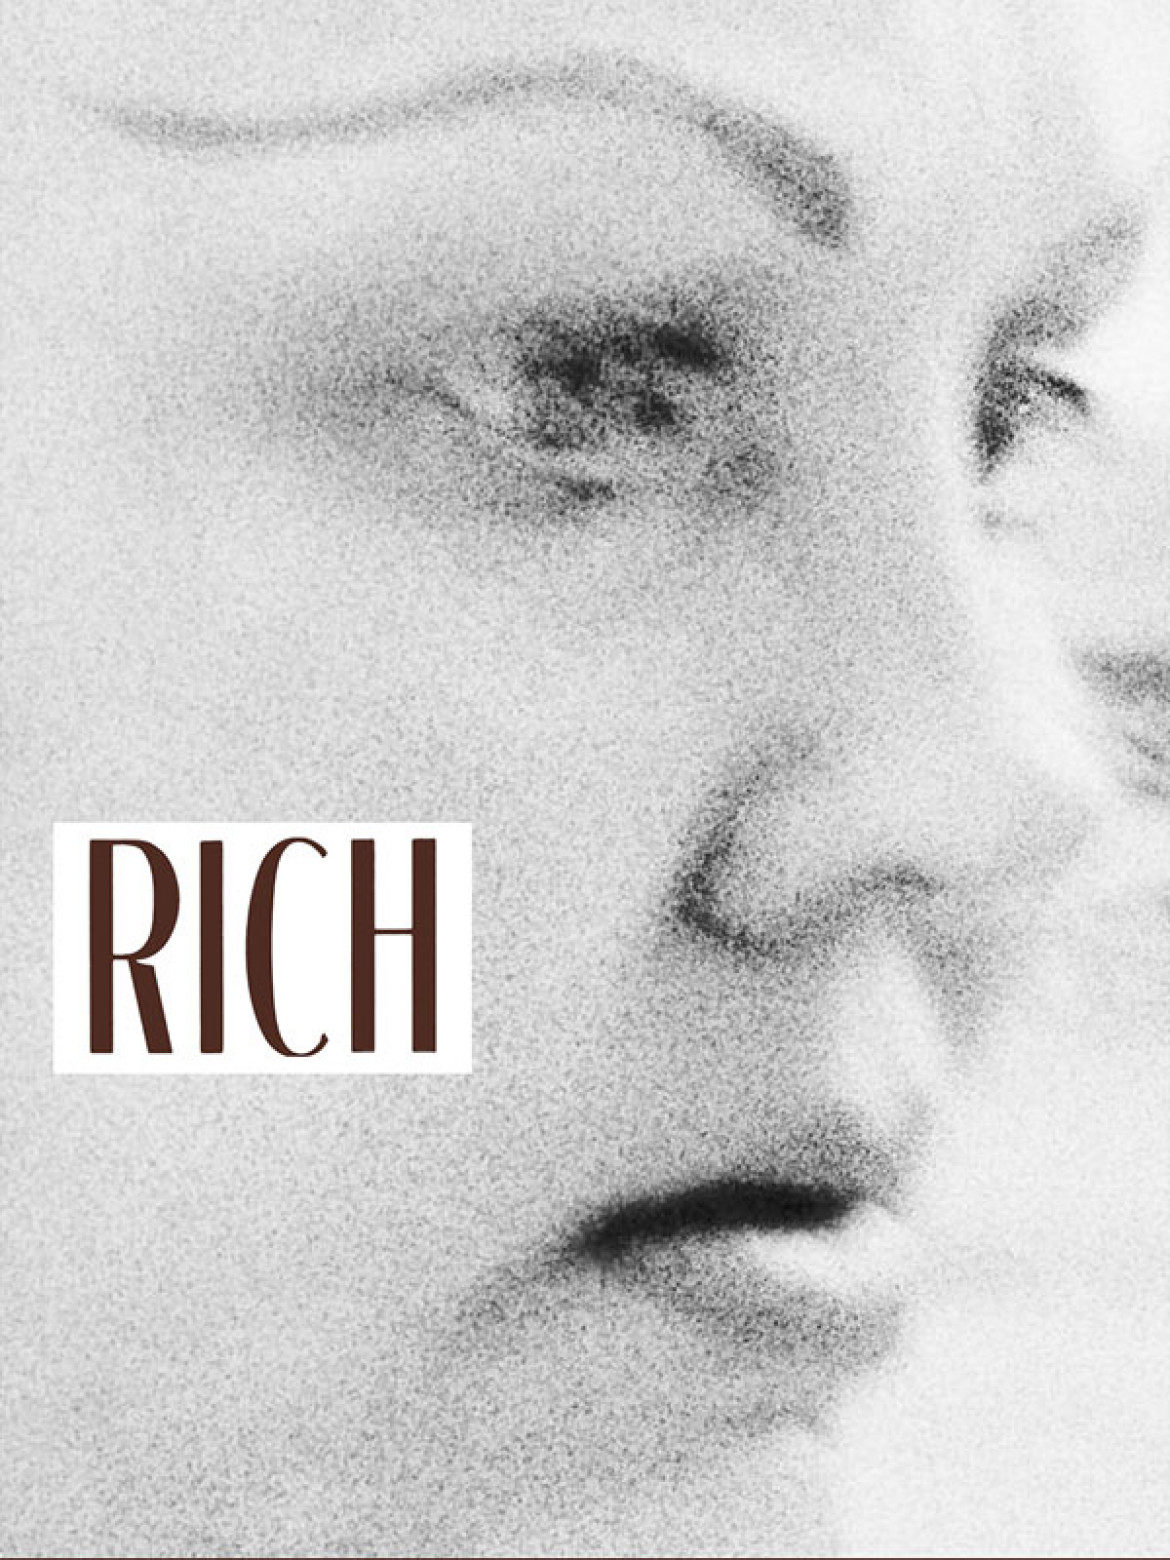 Jim Goldberg “Rich and Poor”, Steidl 2014